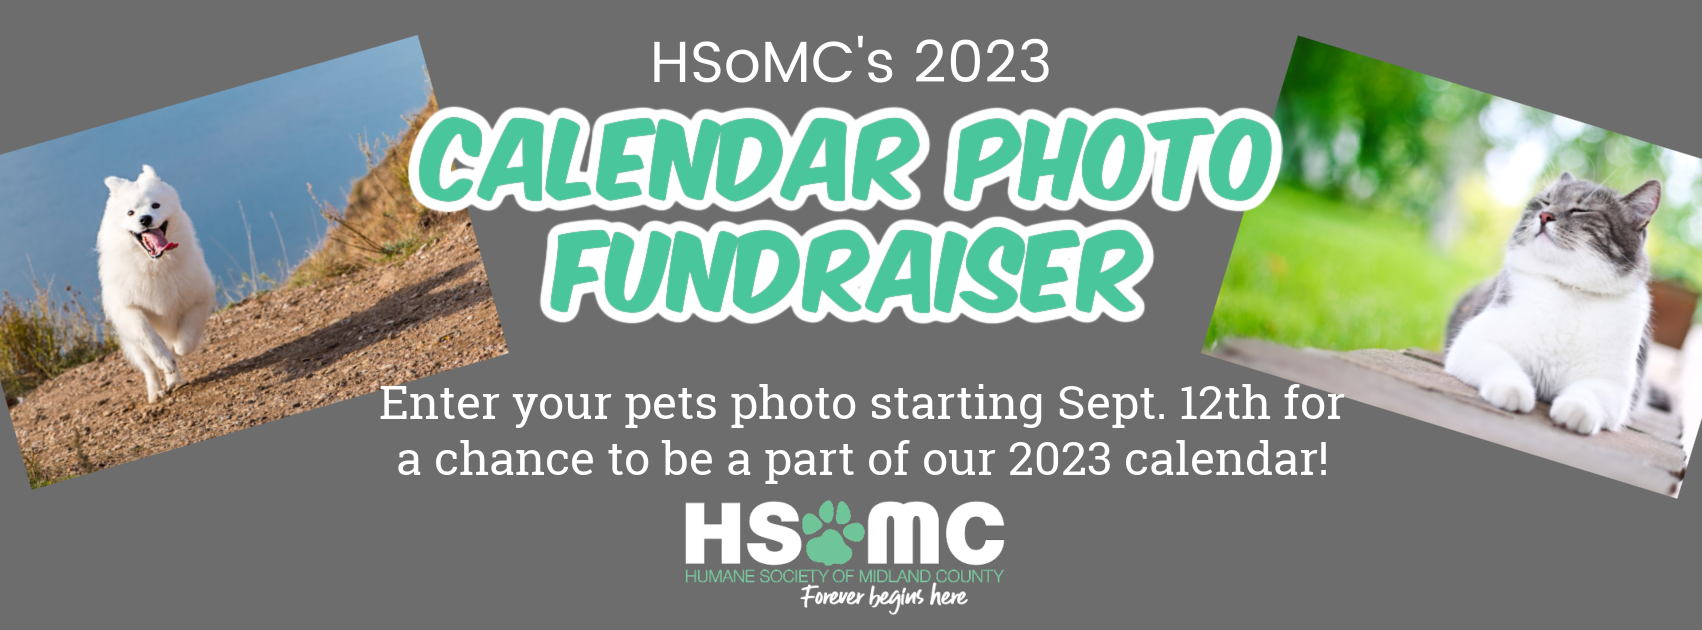 Humane Society of Midland County HSoMC’s 2023 Calendar Photo Fundraiser